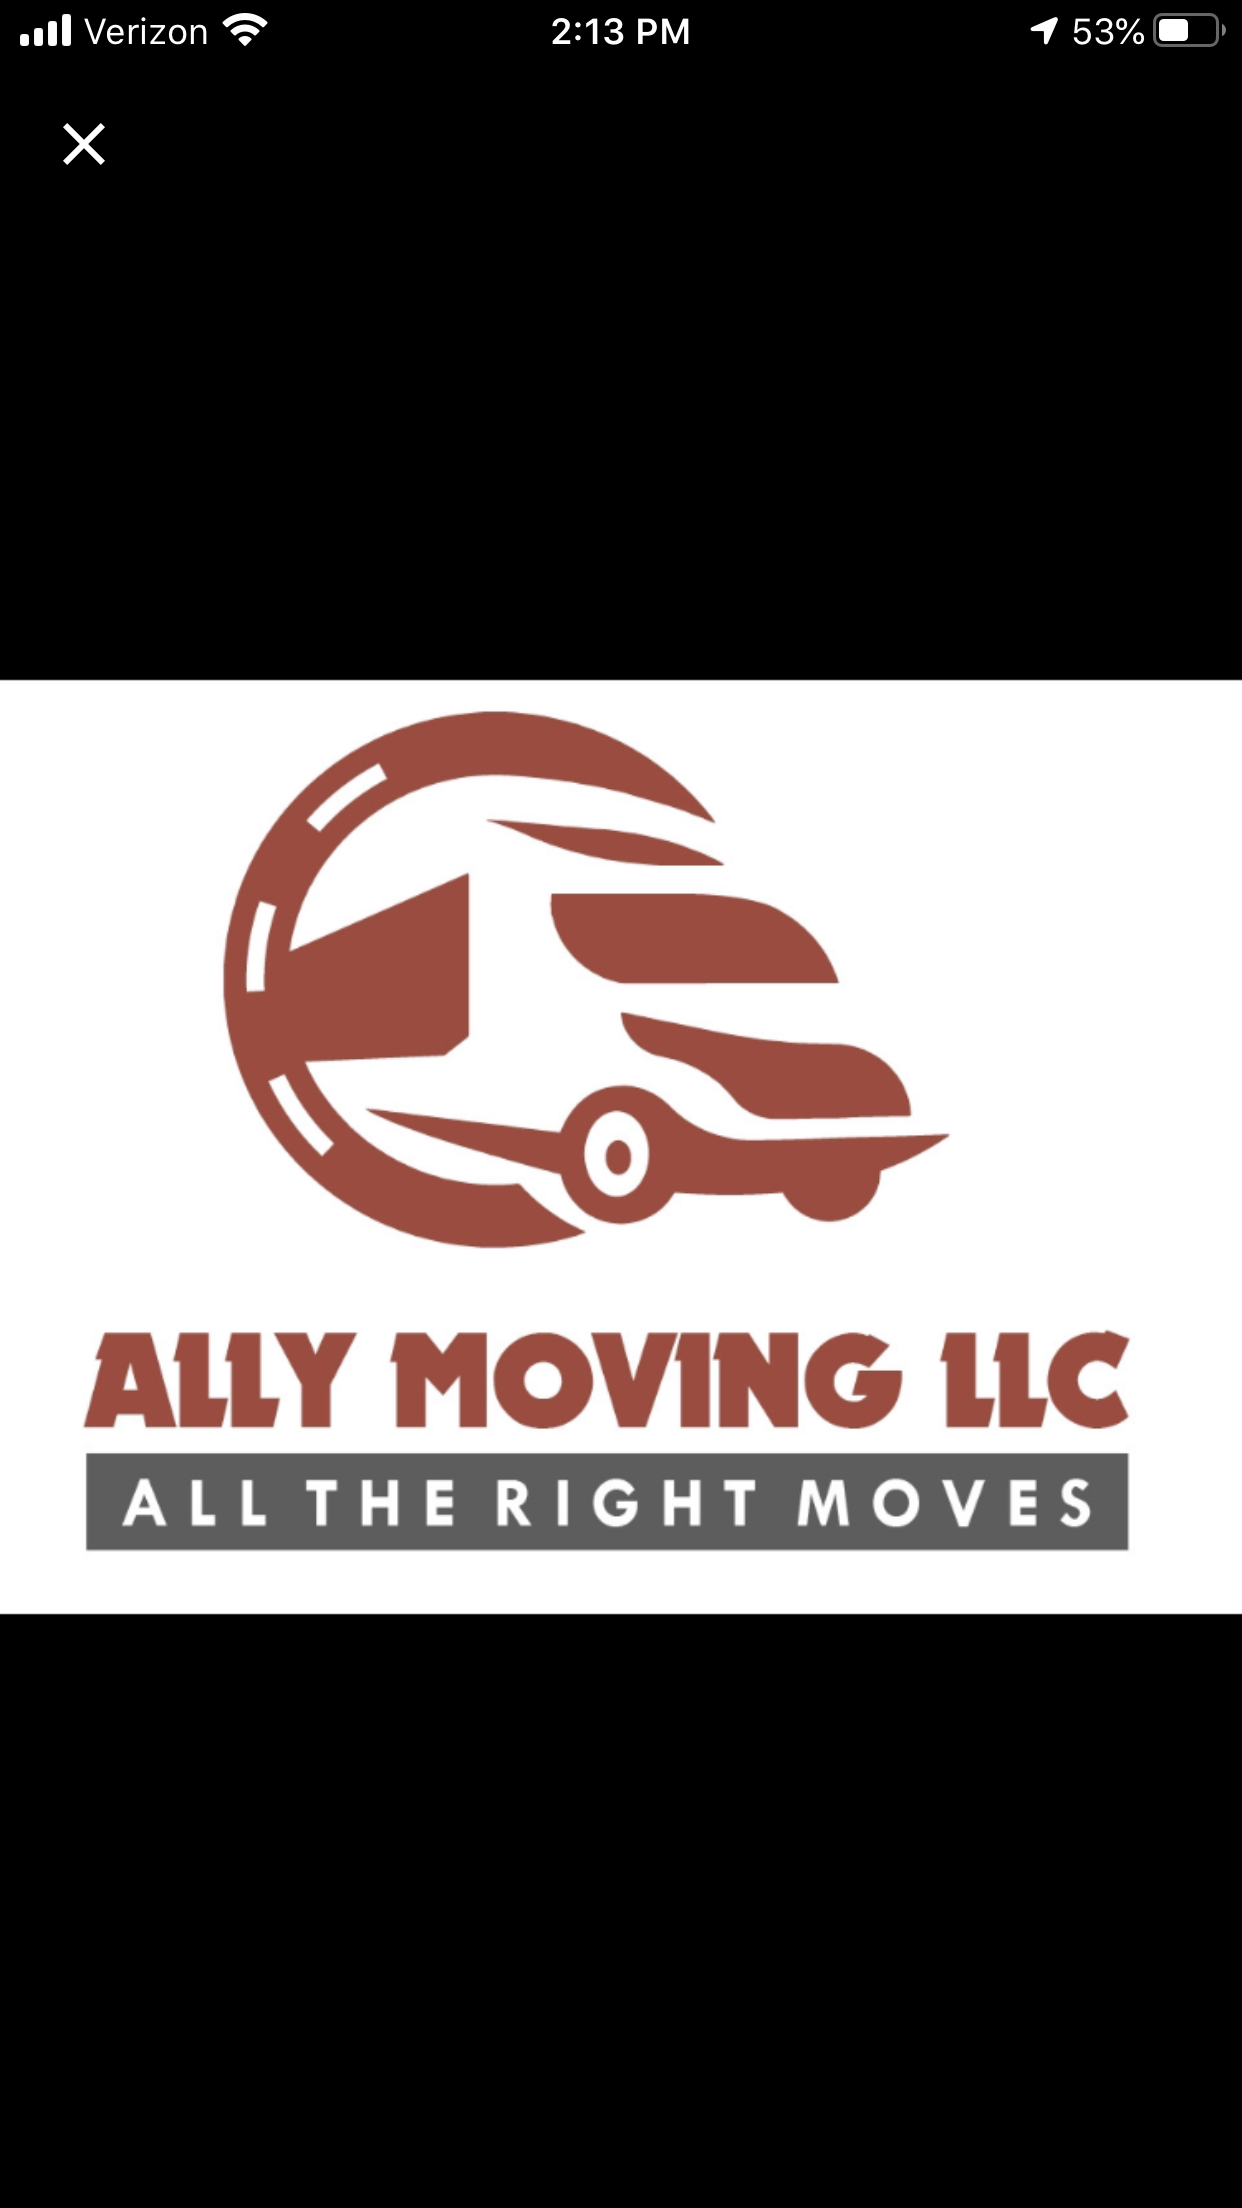 Ally moving llc